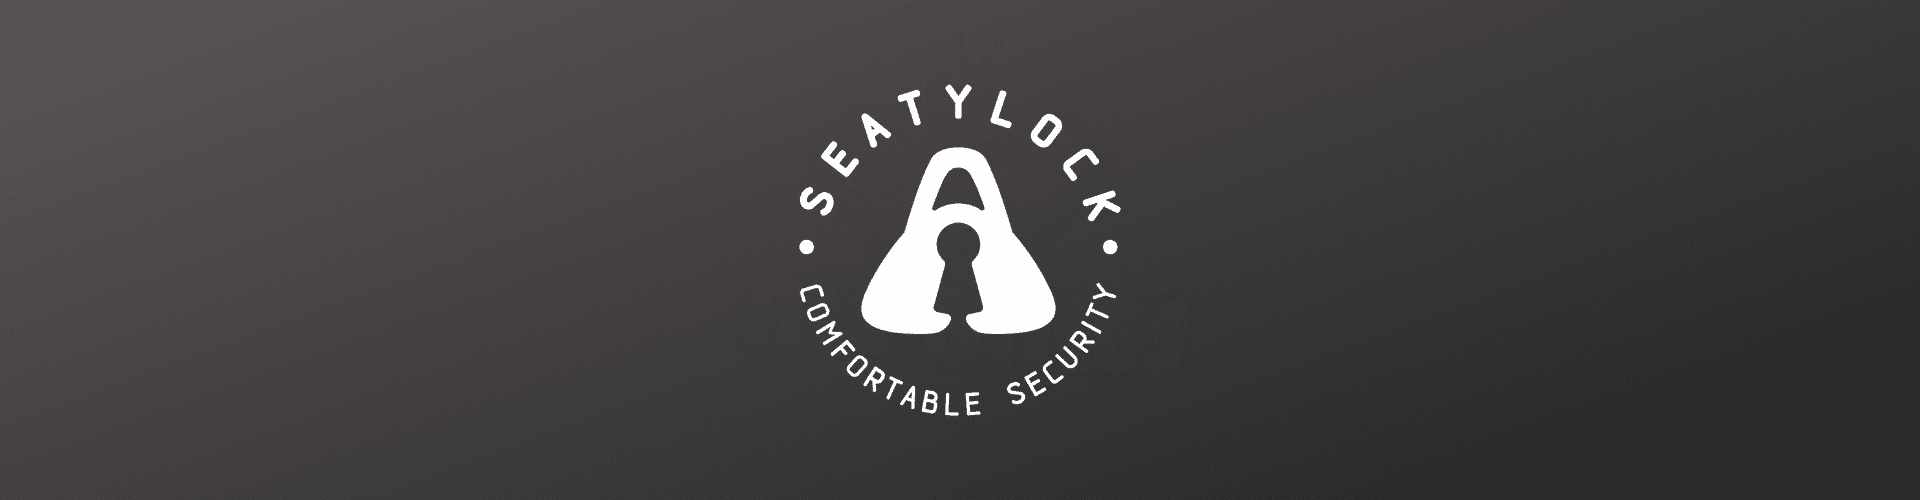 seatylock-Brand-Category